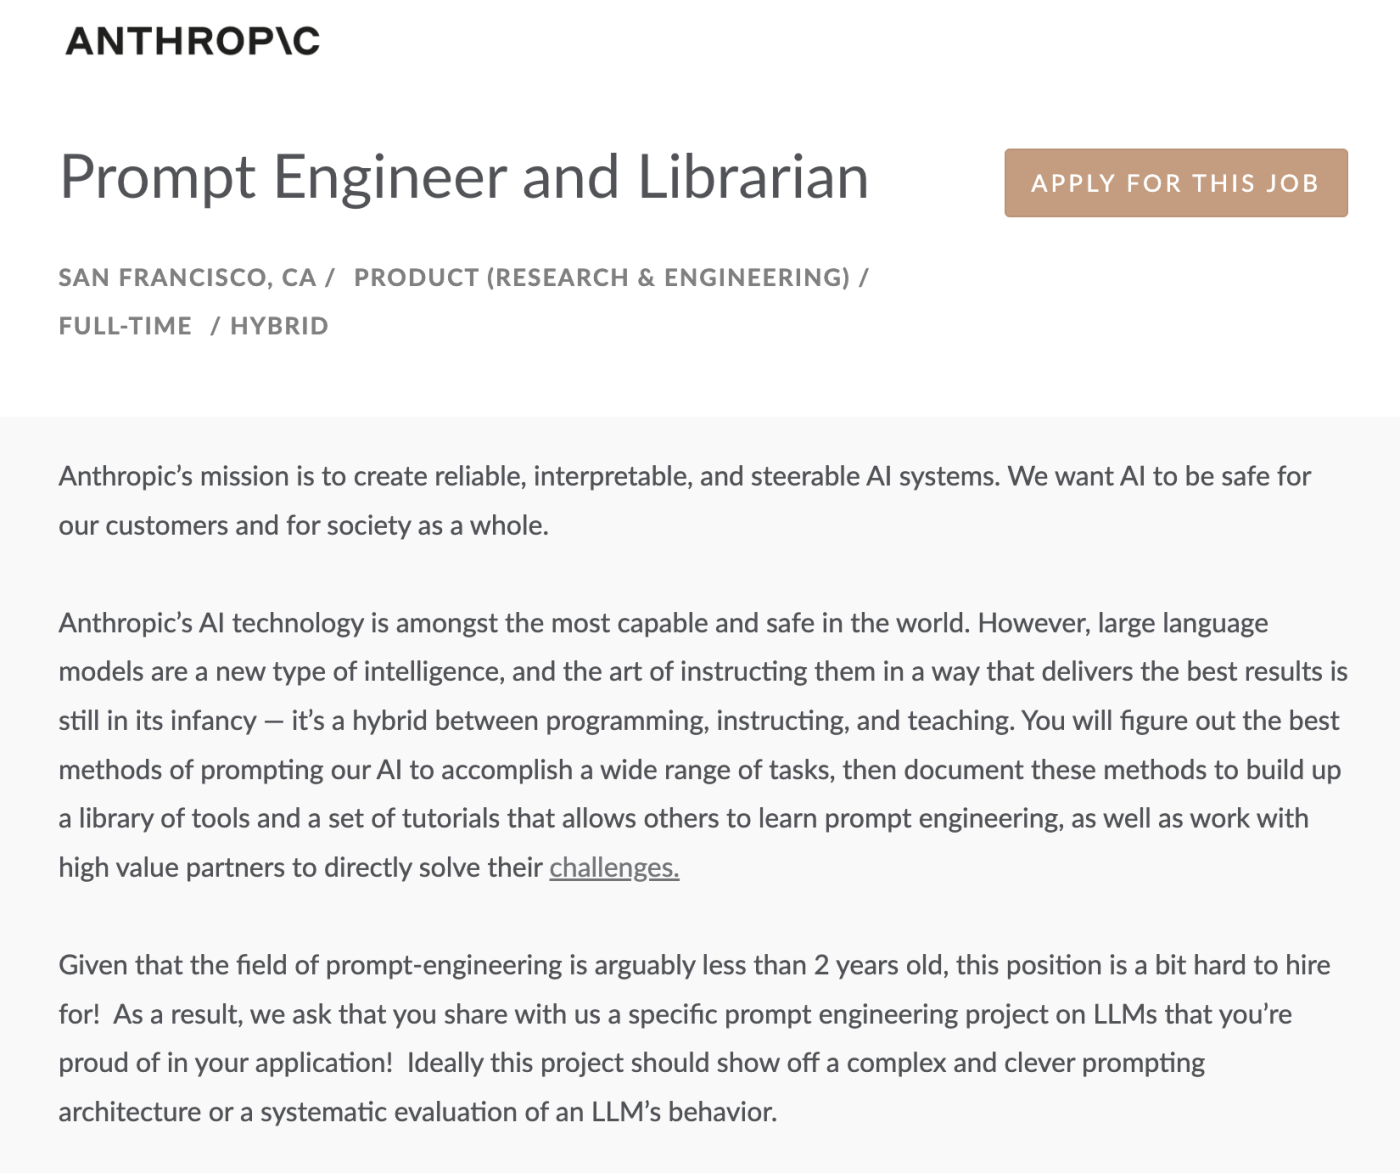 Anthropic's prompt engineer job posting